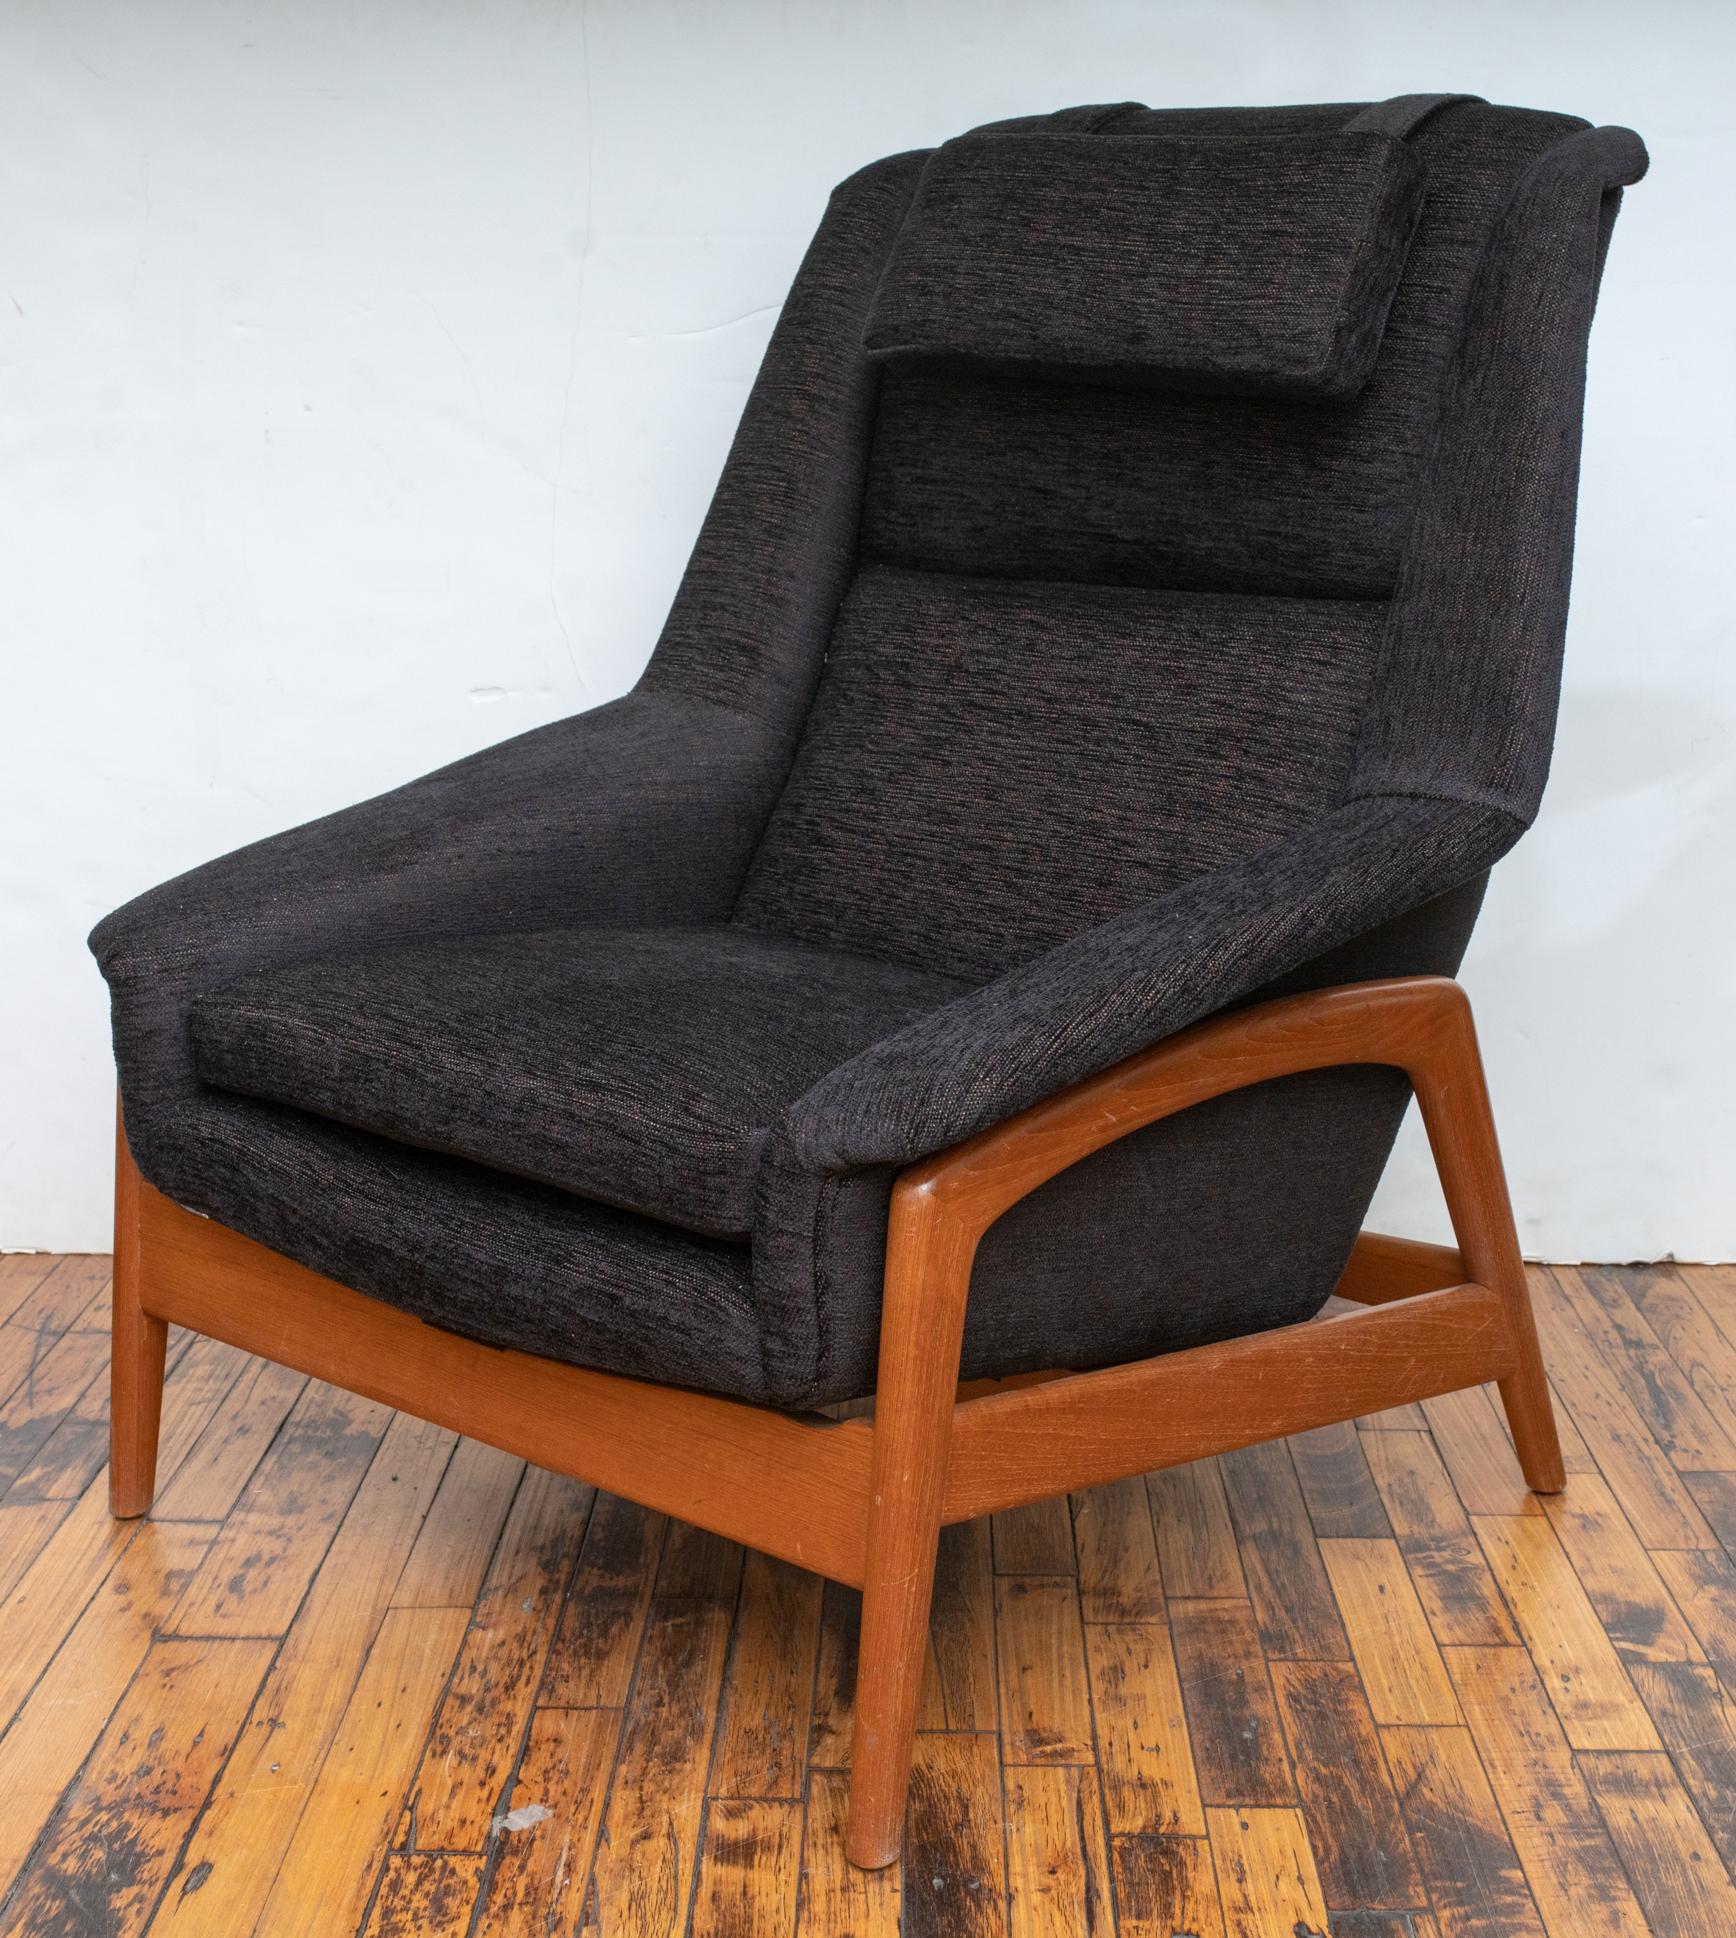 Swedish Folke Ohlsson Lounge Chair and Ottoman with Teak Wood Frame